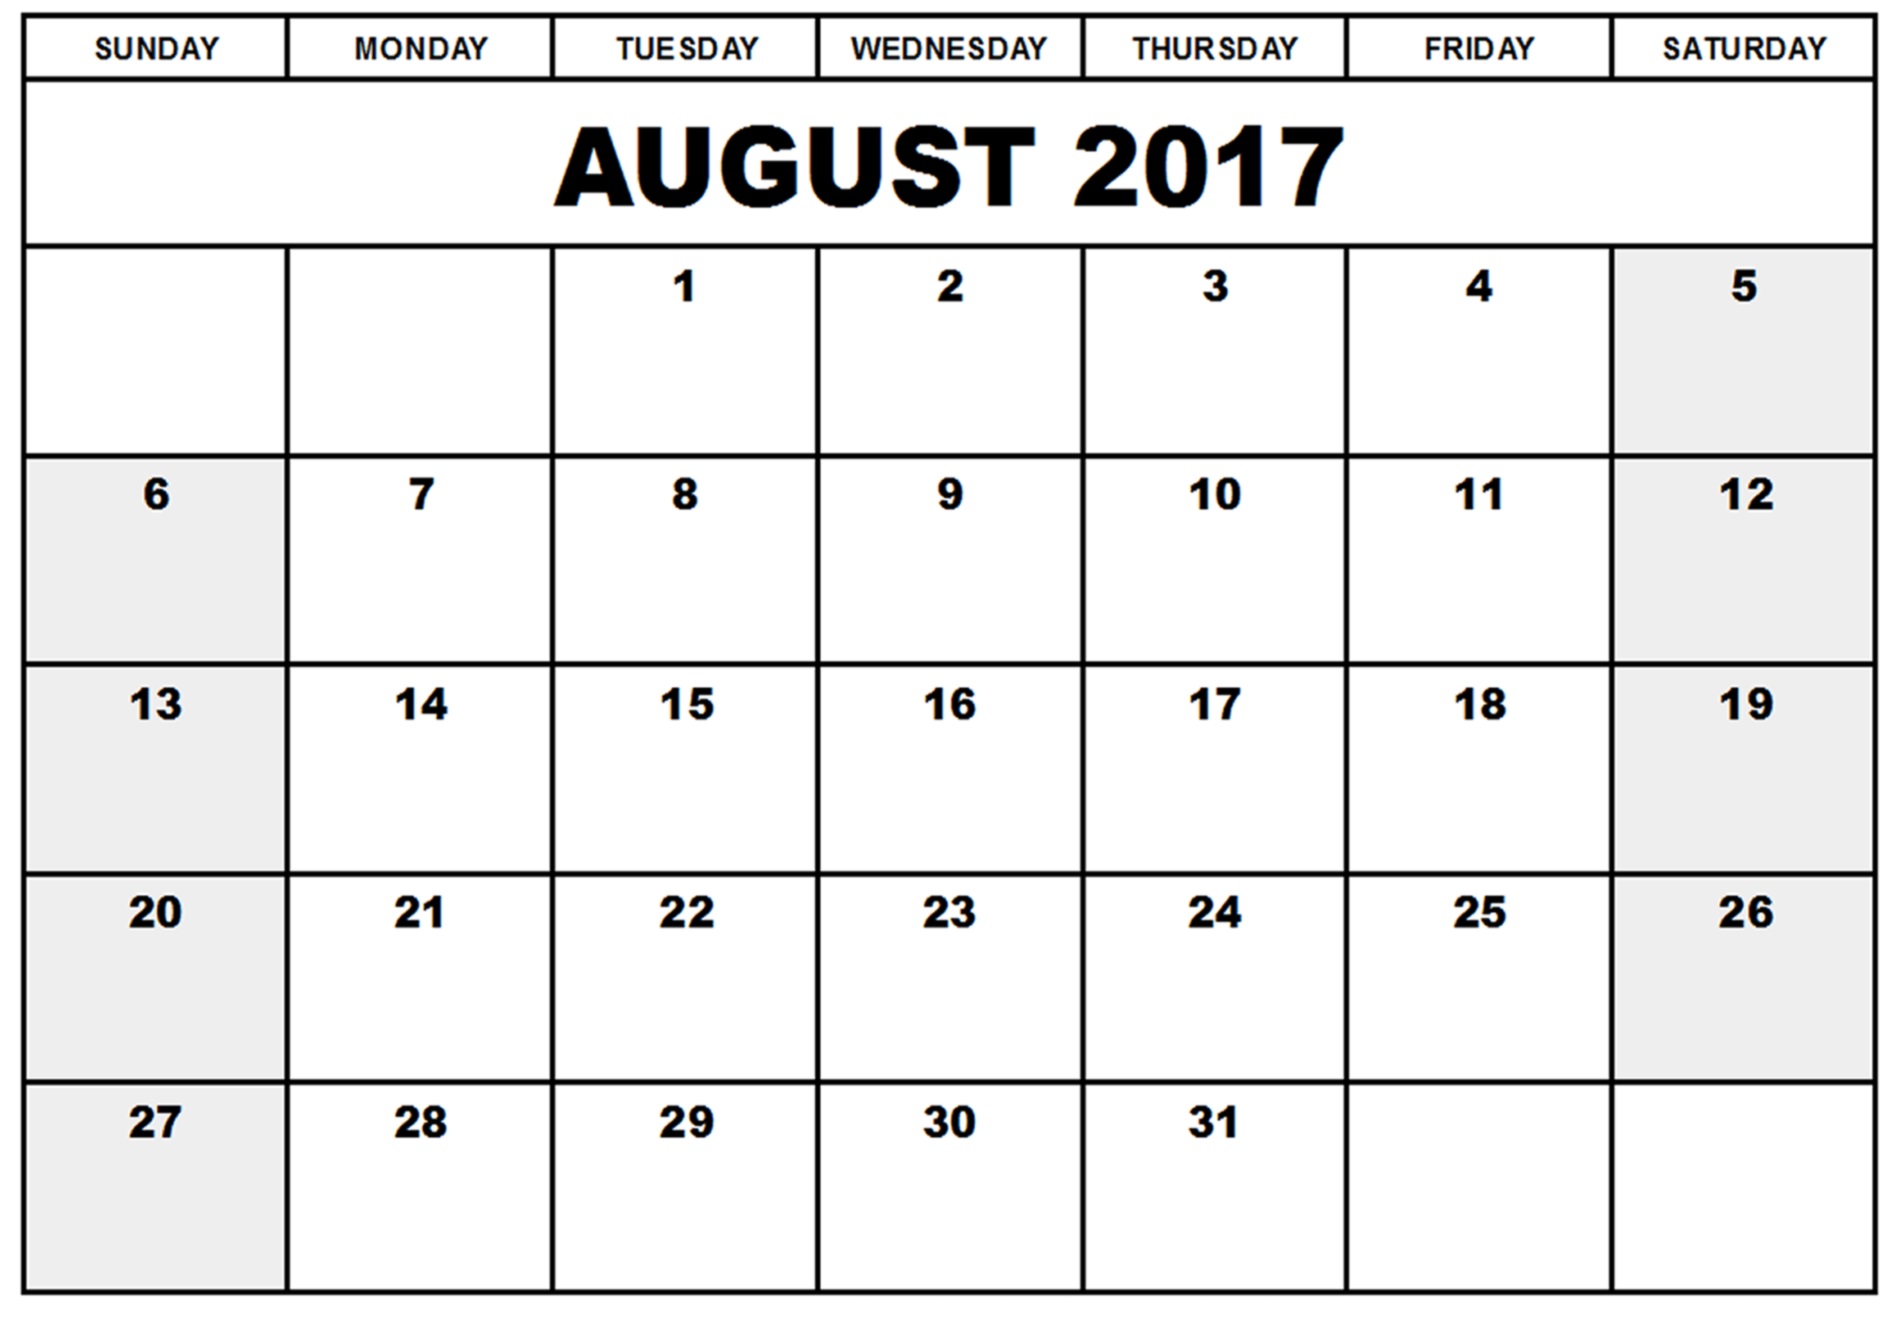 uncategorized-free-calendar